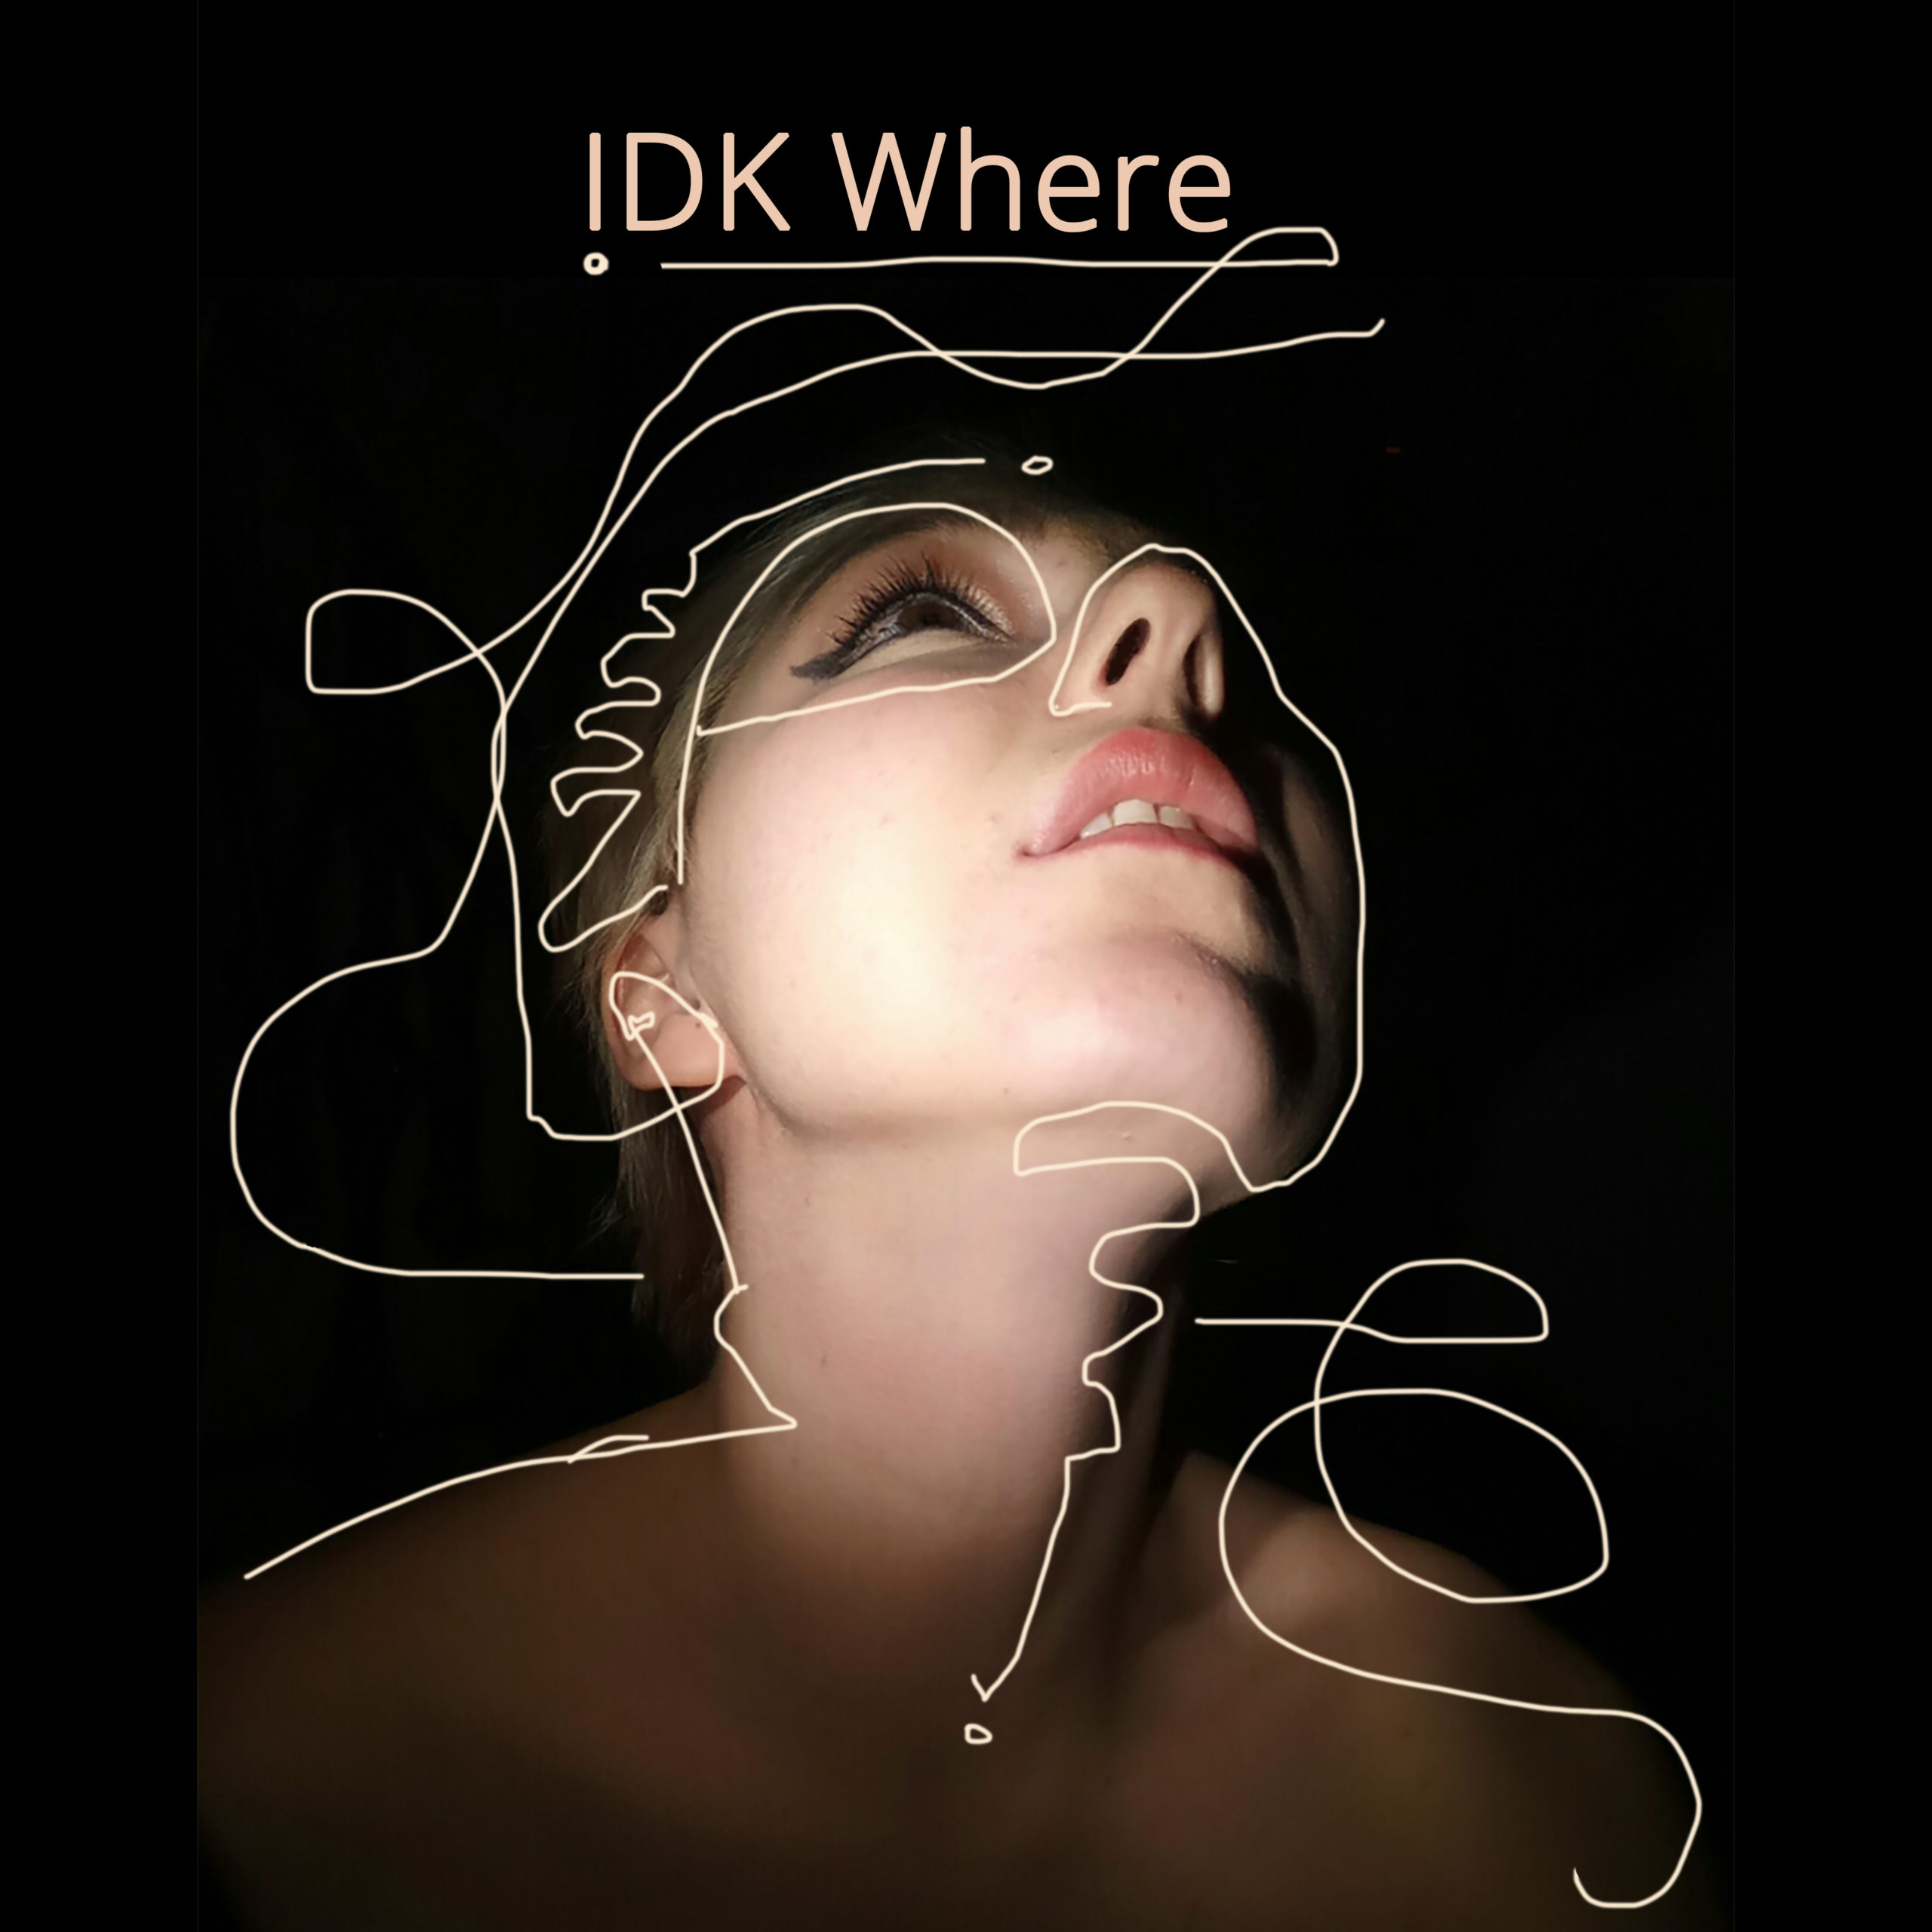 IDK Where